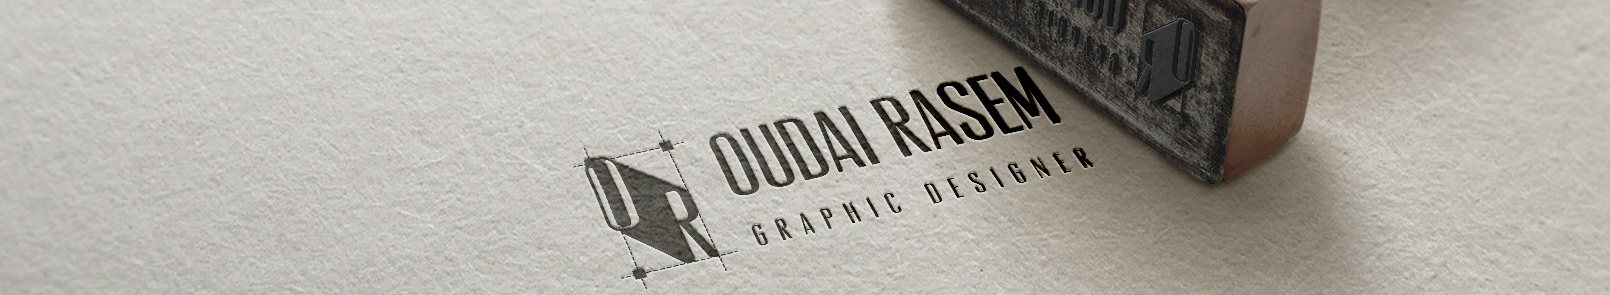 Oudai Rasem's profile banner